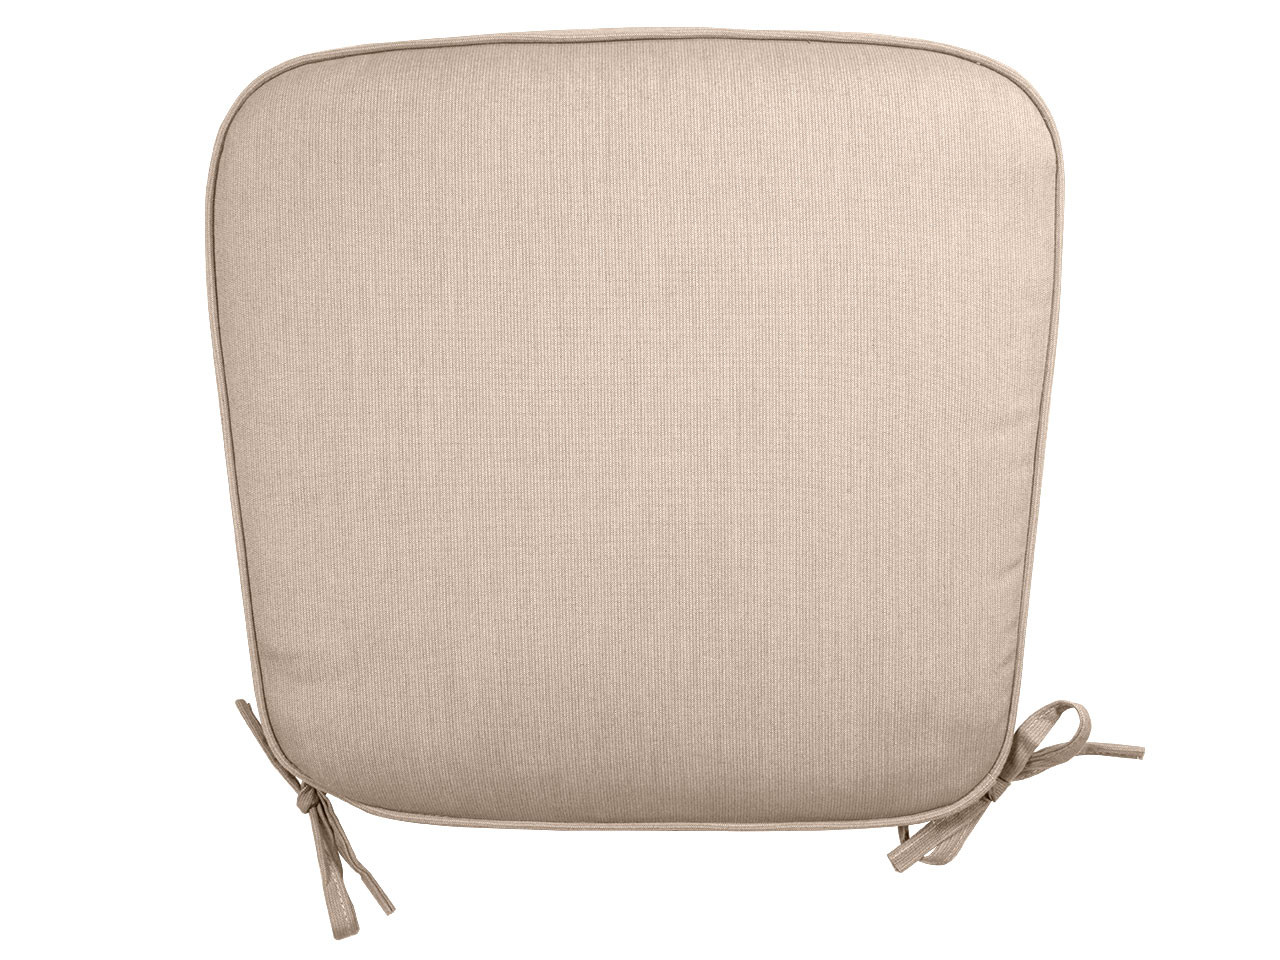 20 x 18 in. Linen Antique Beige Chair Seat Cushion - Sunbrella Acrylic